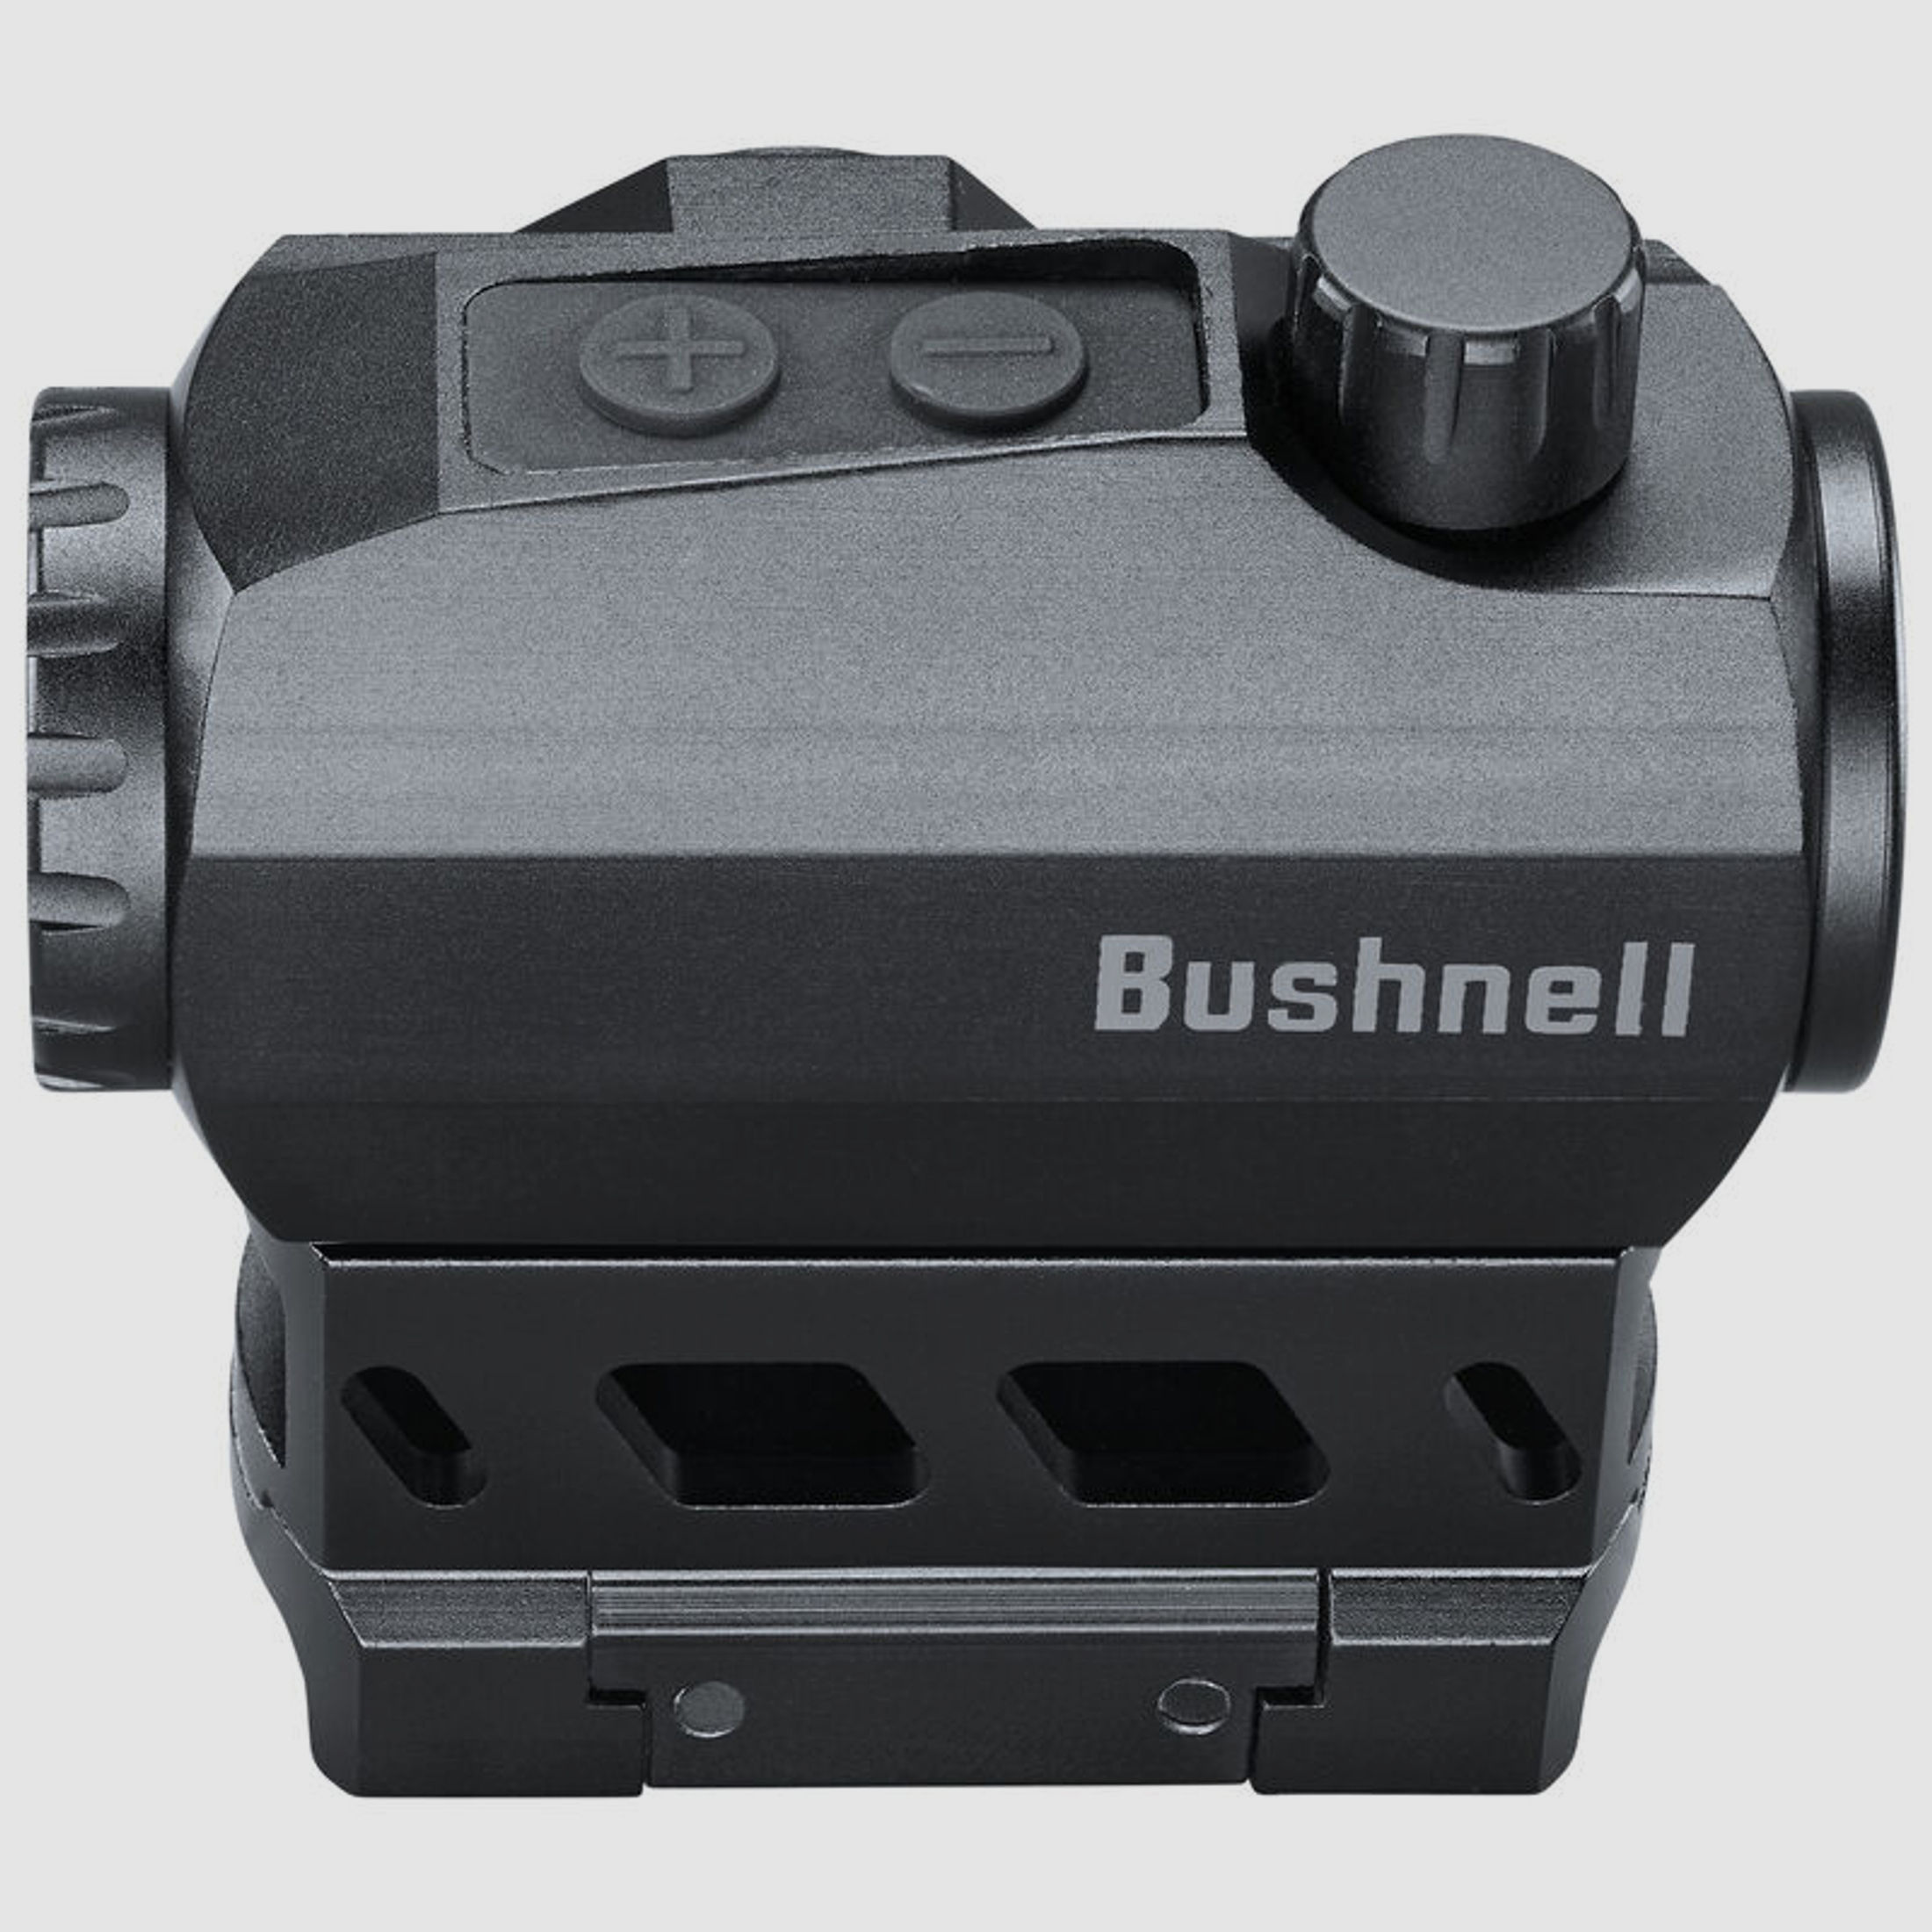 Bushnell Rotpunktvisier TRS-125 1x22 inkl. Weaver/Picatinnymontage Low/High-Rise